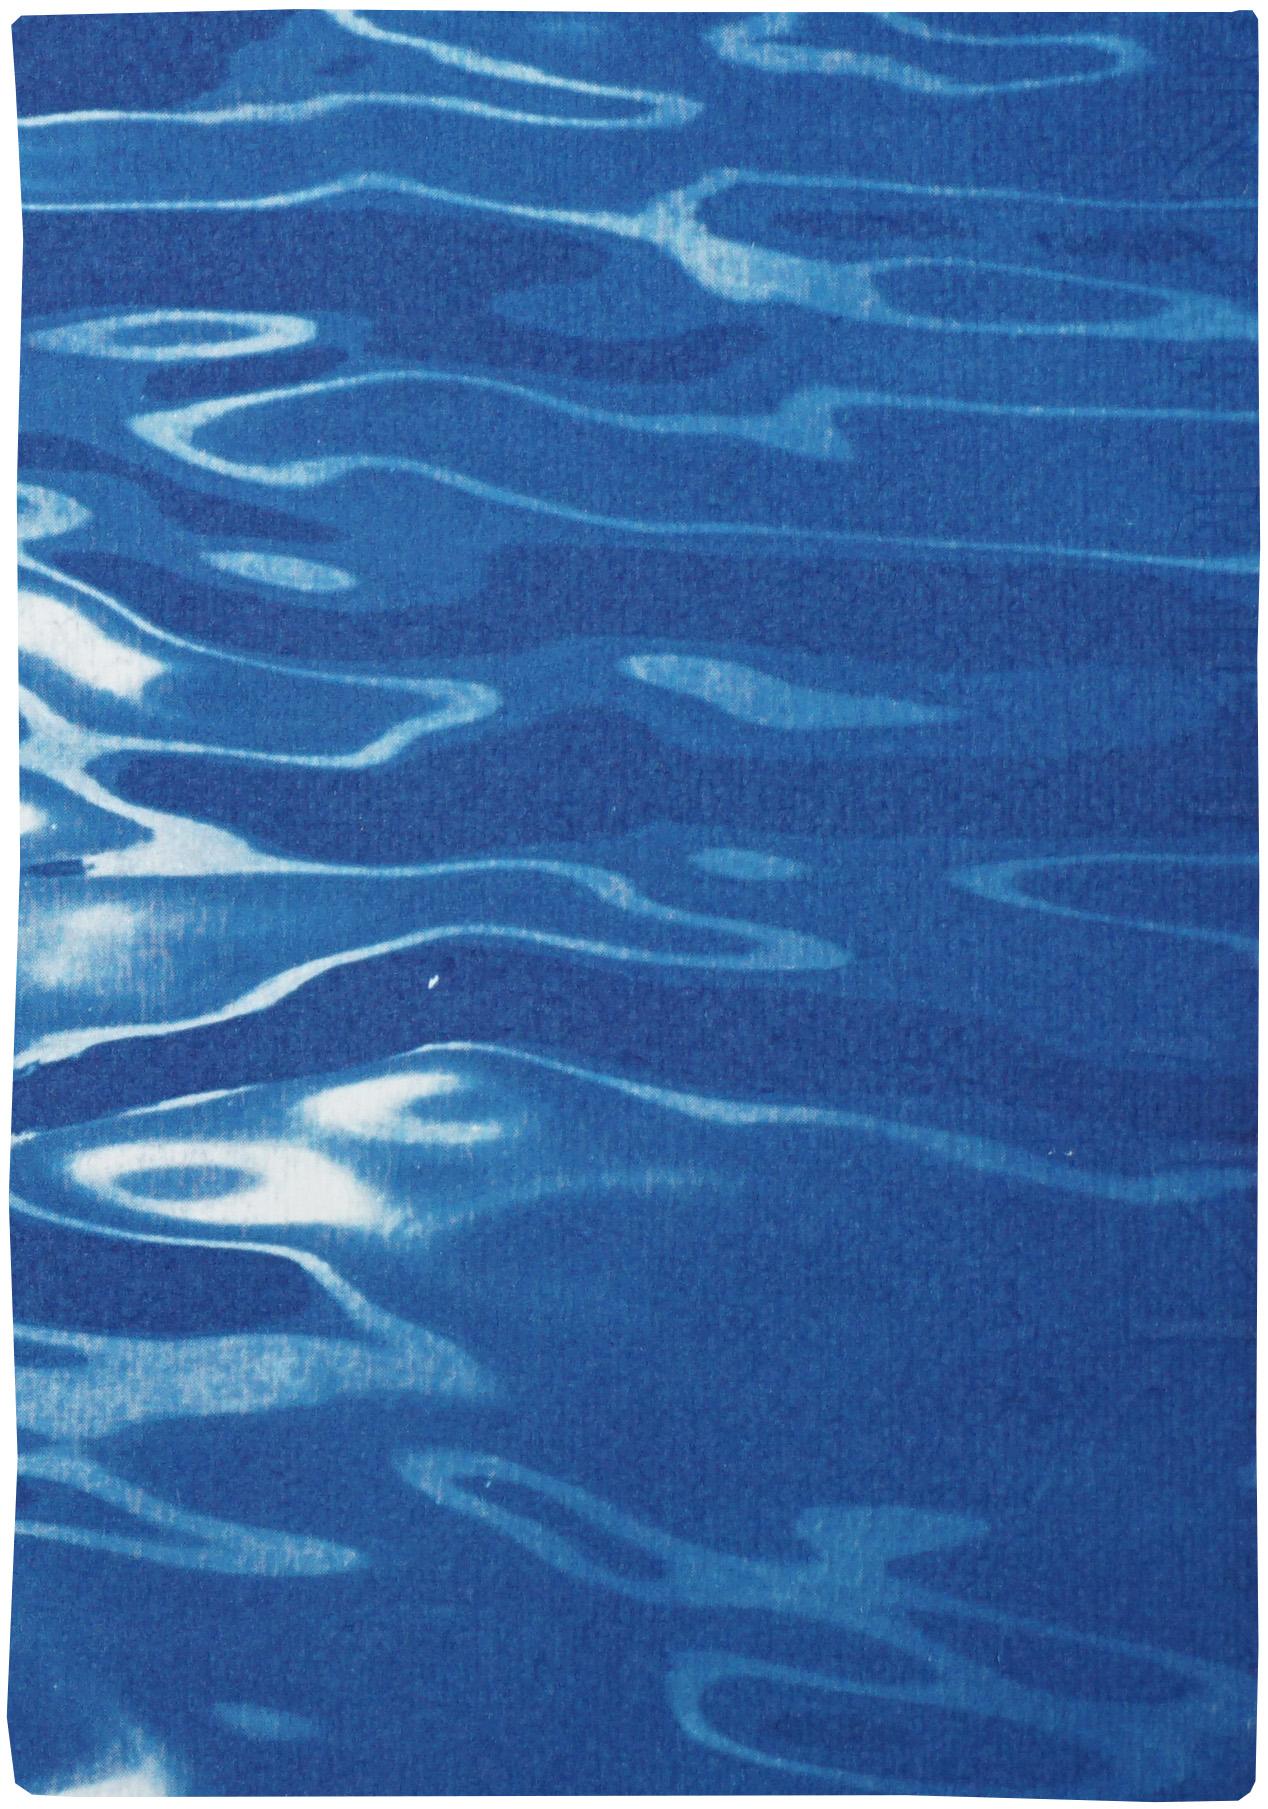 Lido Island Reflections, Venice Landscape Blue Tones, Minimal Cyanotype Print  3